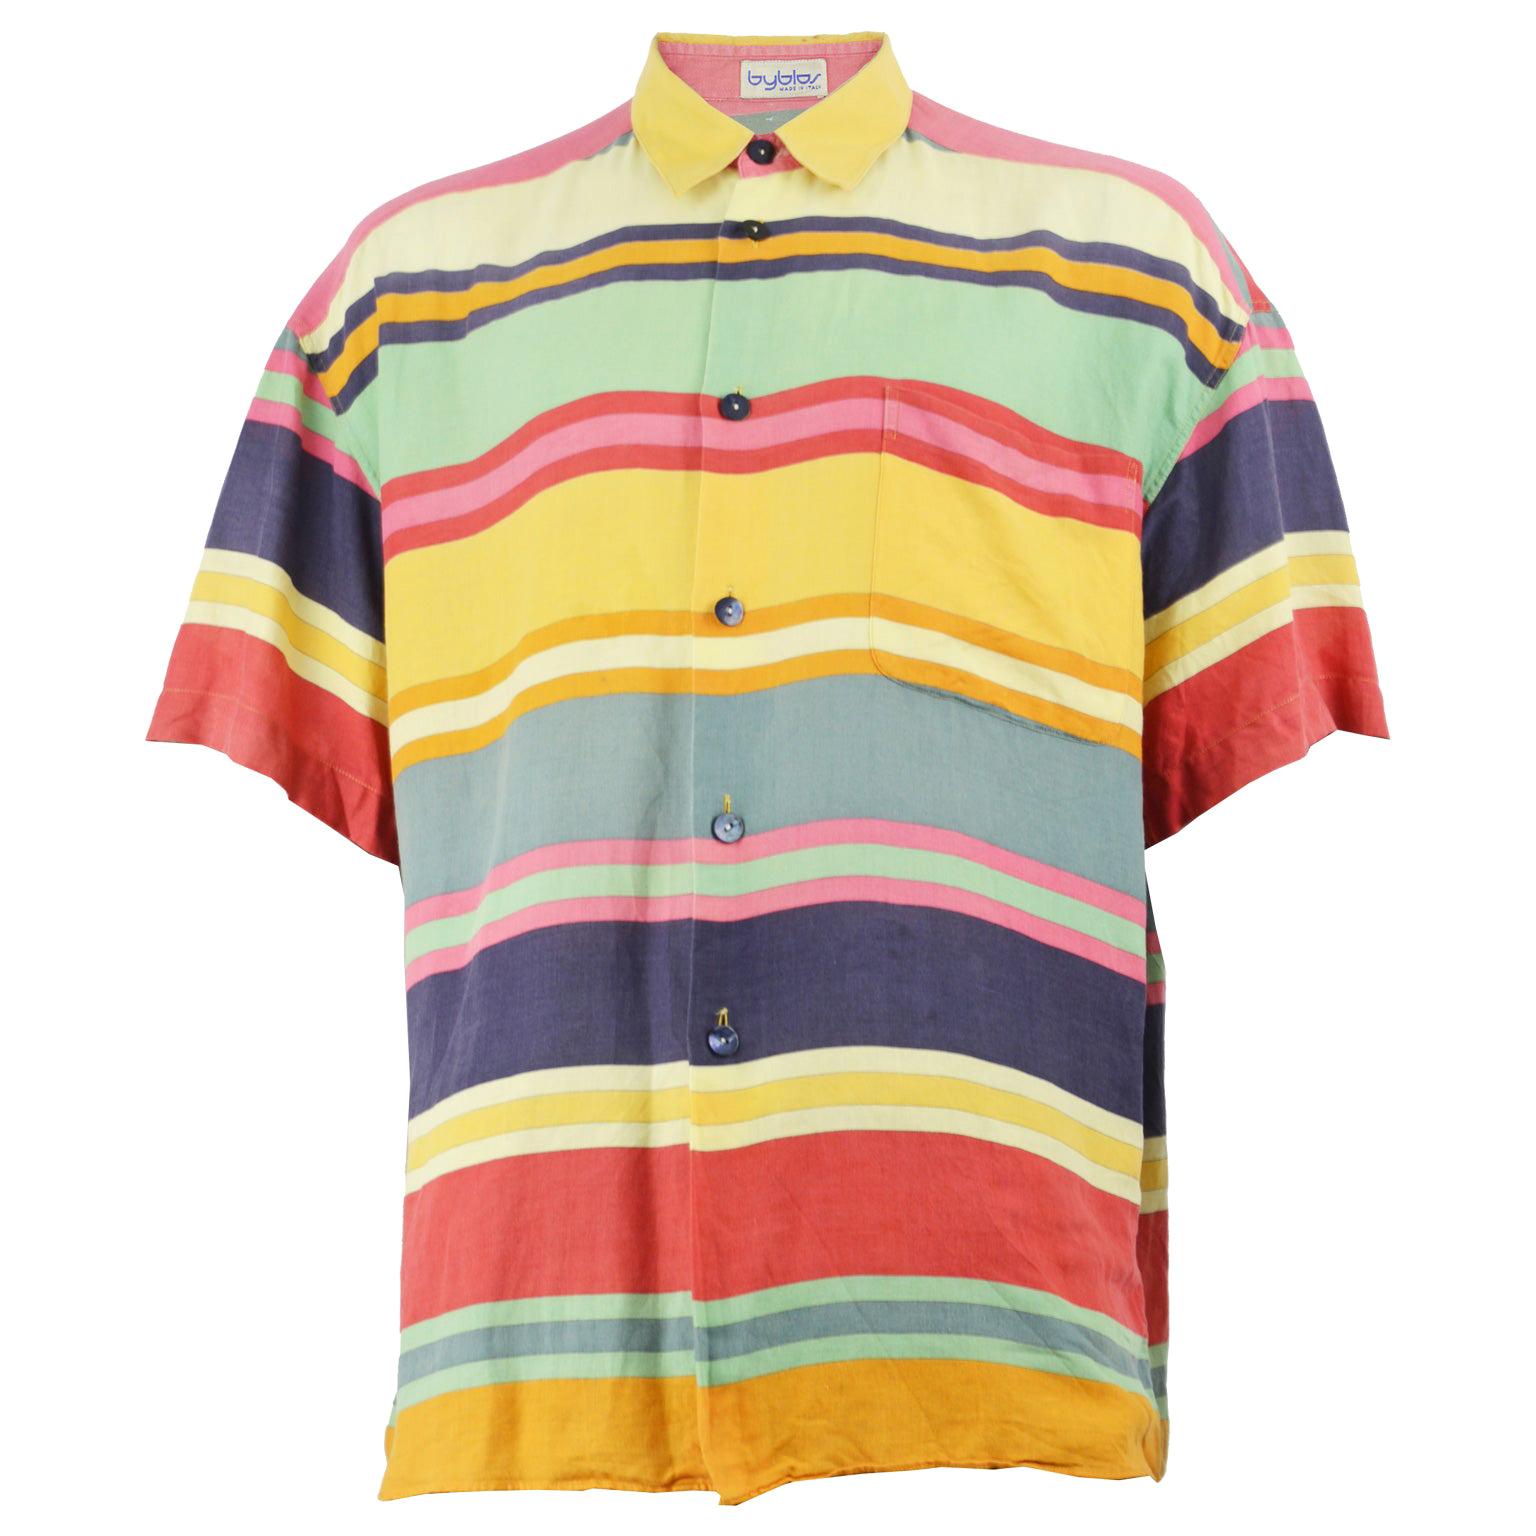 Byblos Men's 1980s Vintage Striped Linen Short Sleeve Button up Summer Shirt